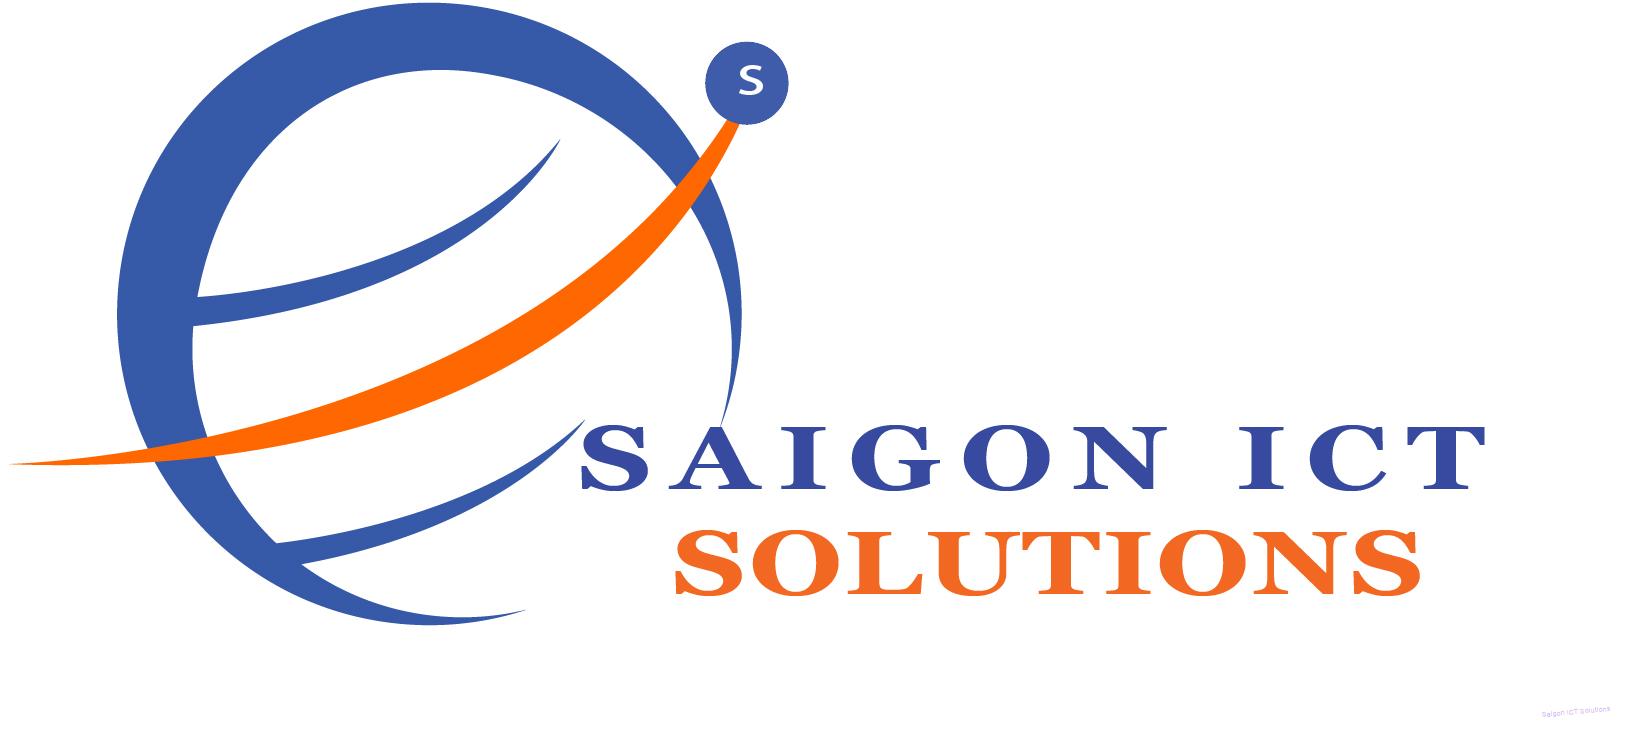 SAIGON ICT SOLUTIONS